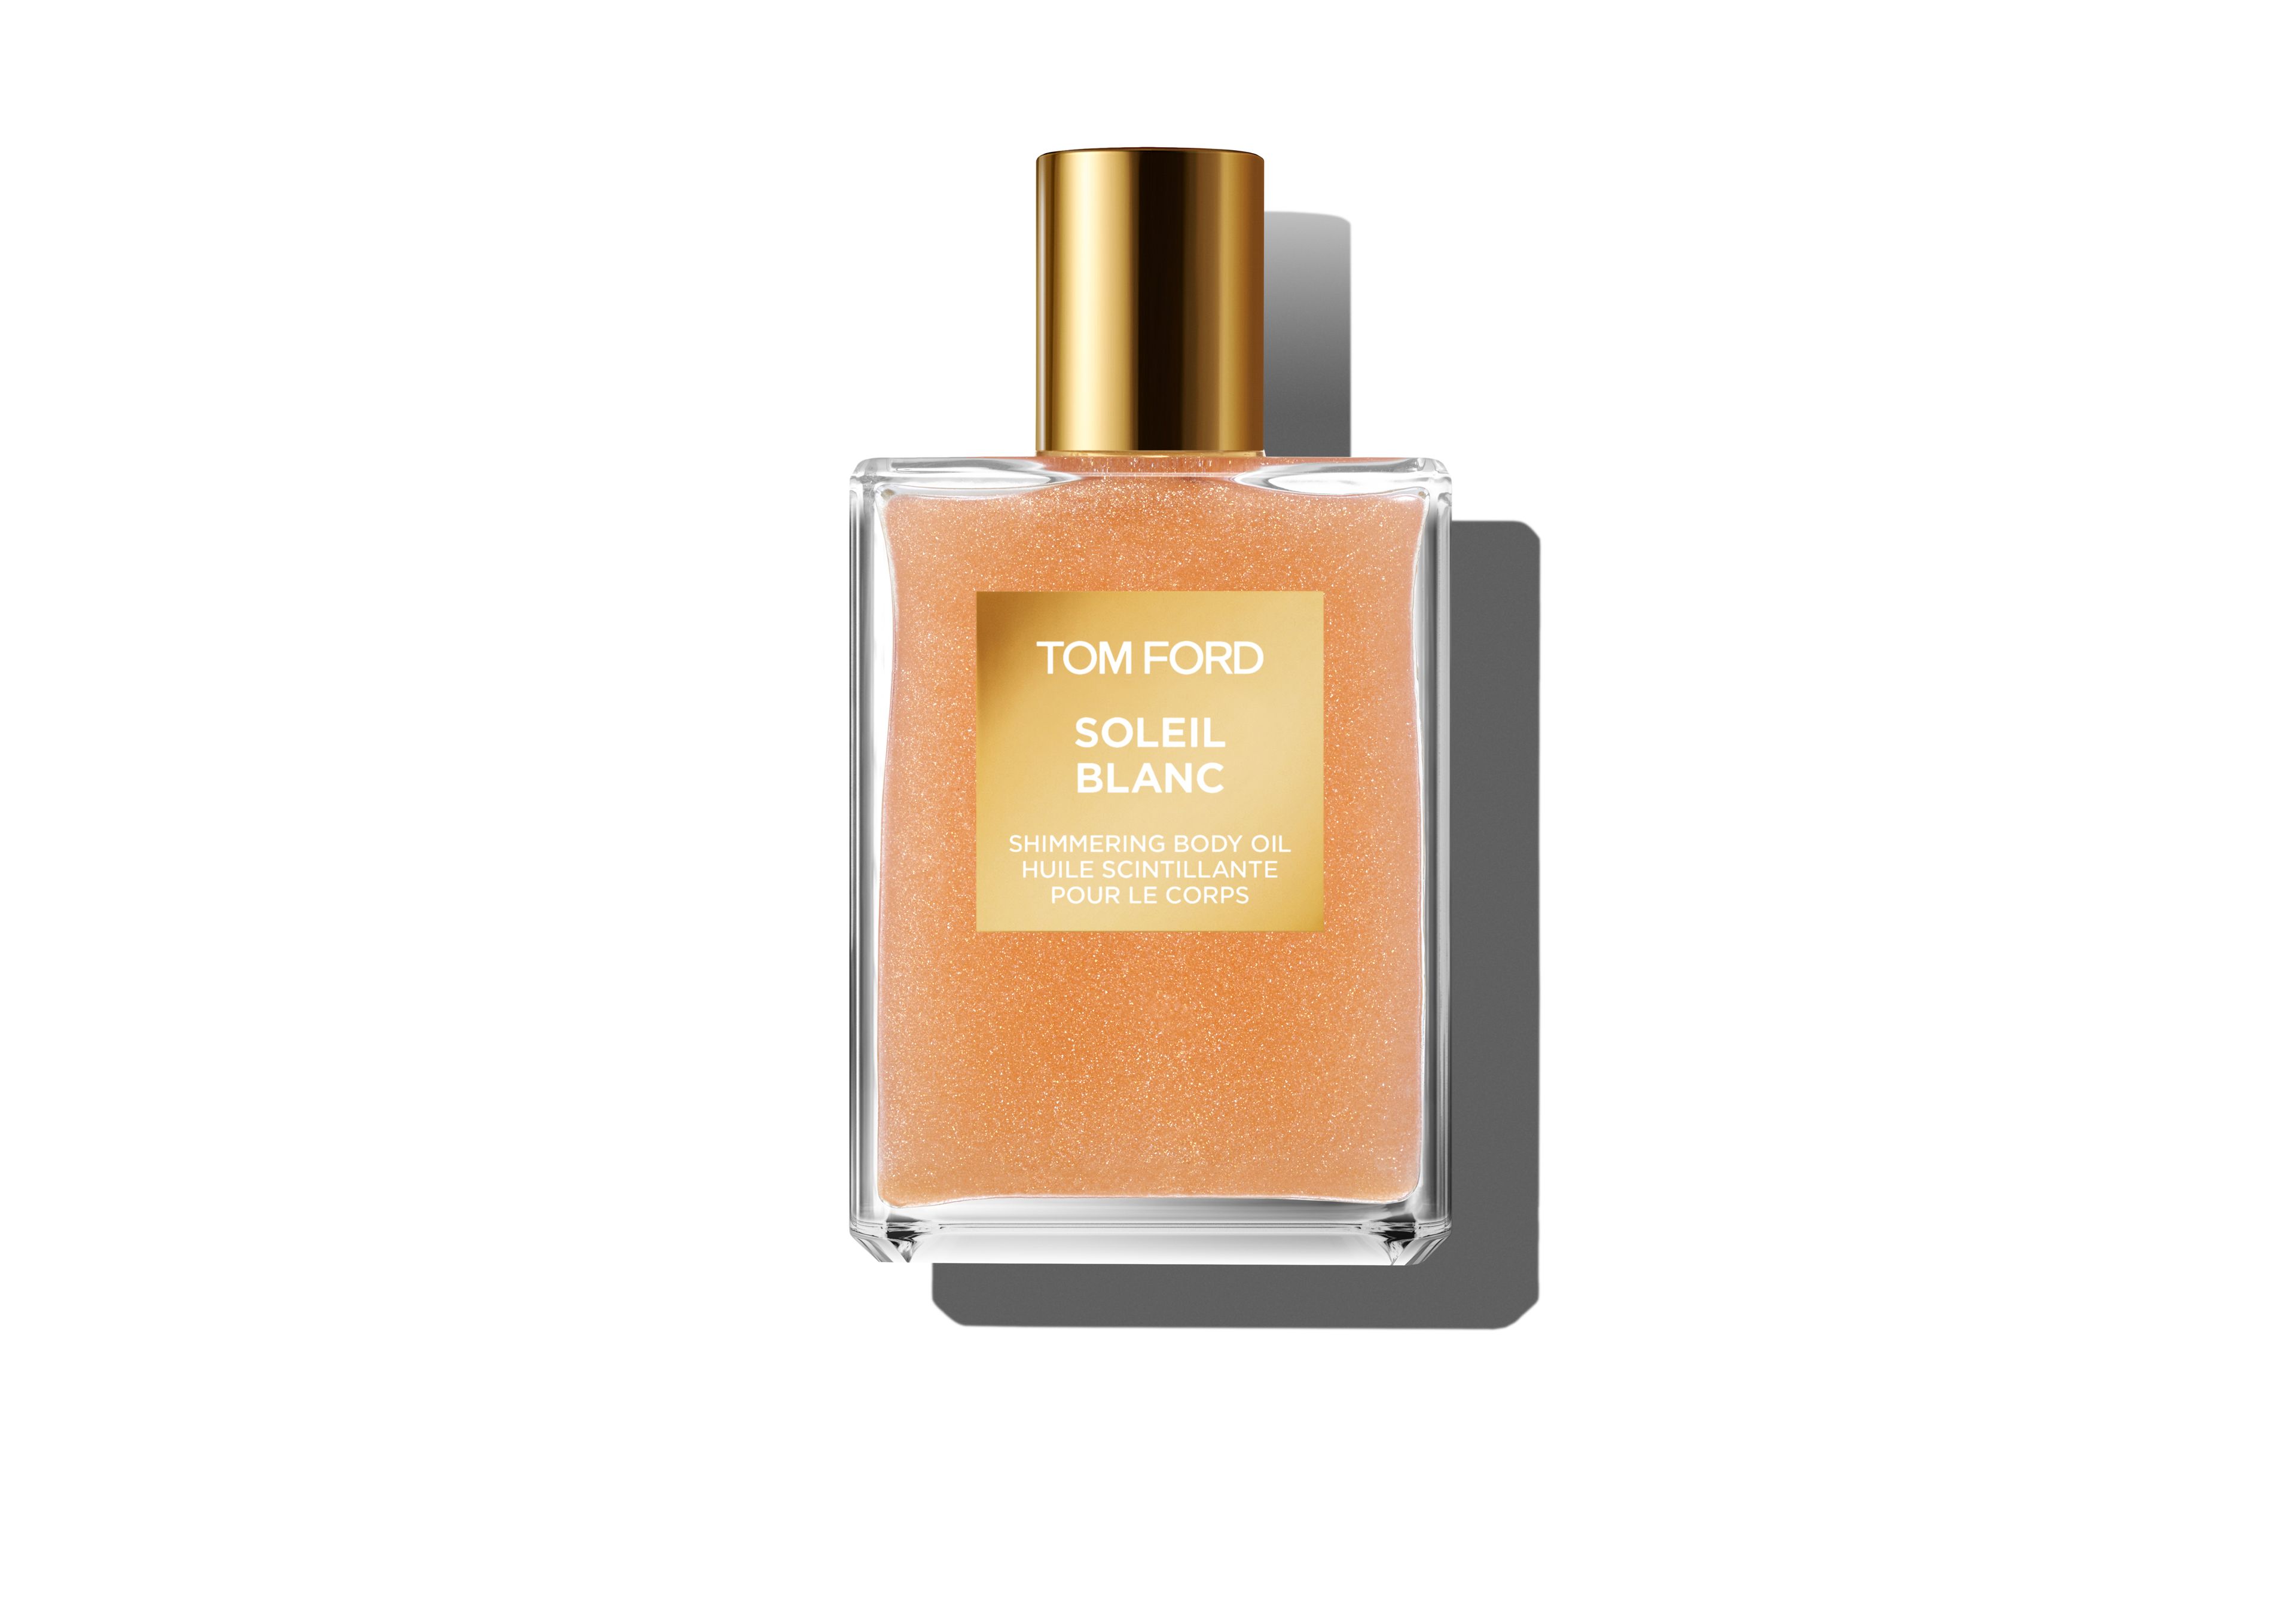 Tom Ford Soleil Blanc Shimmering Body Oil

shade: Rose Gold 5